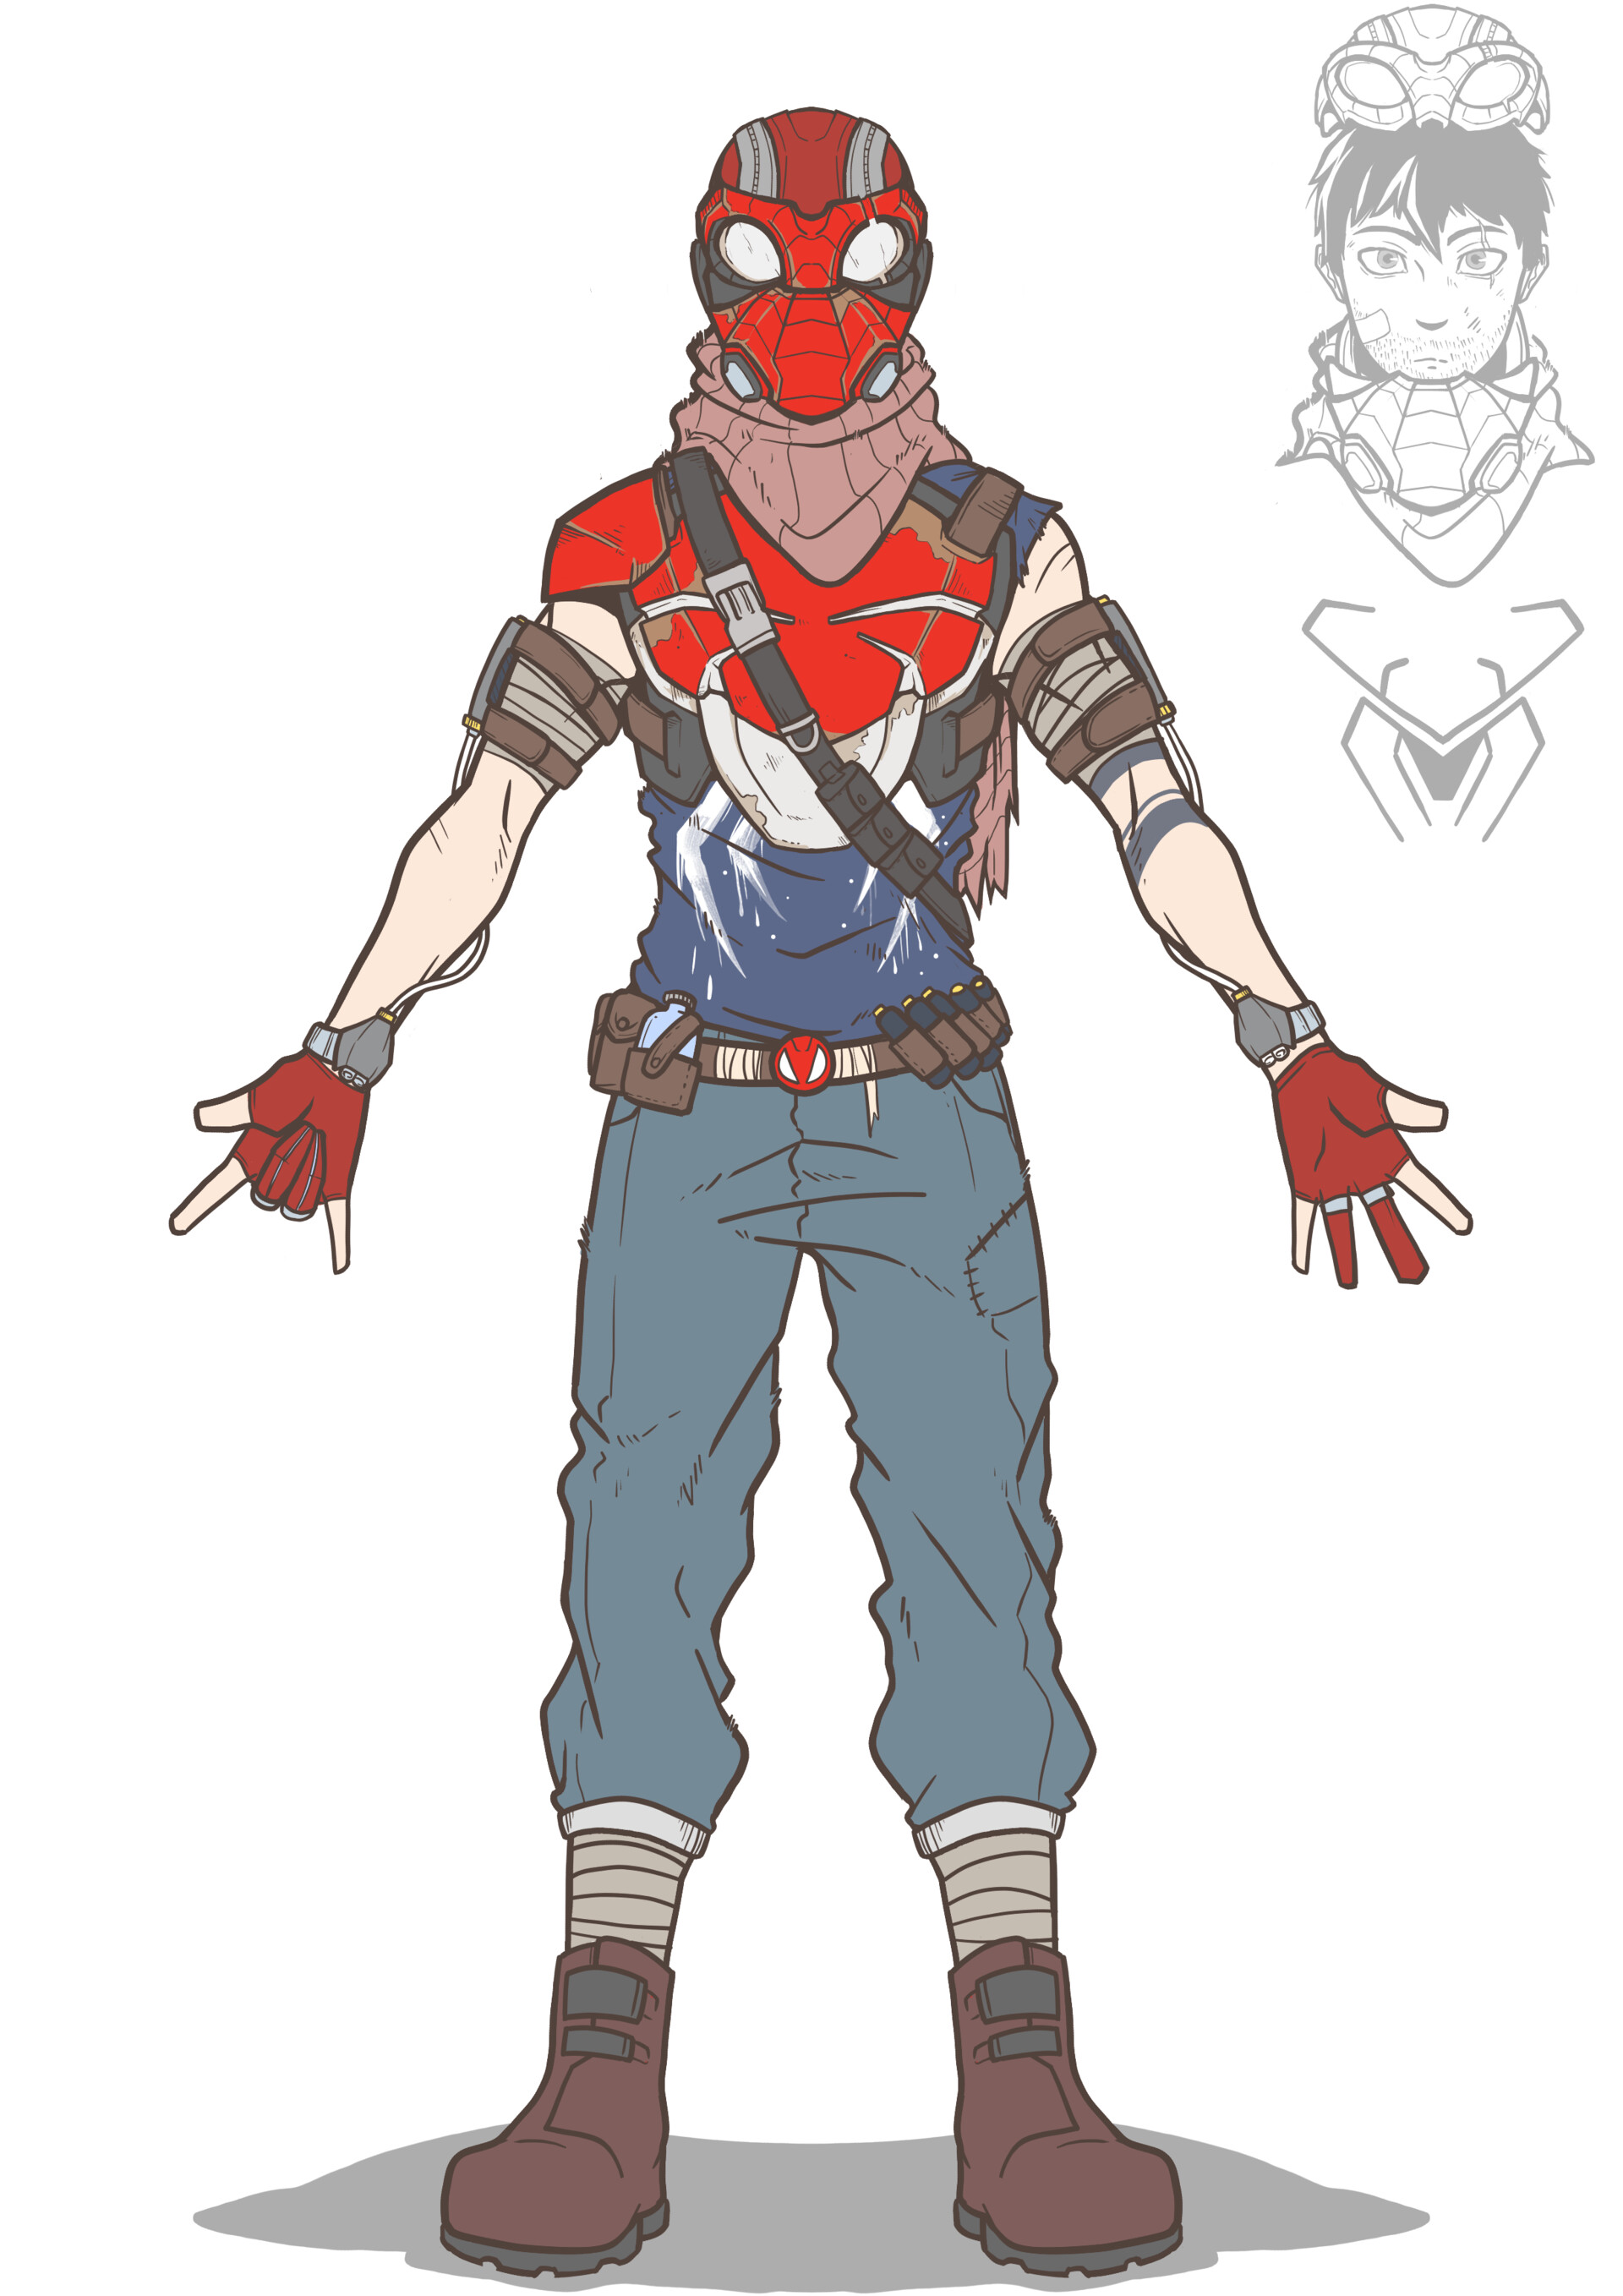 ArtStation - Character Design - Spiderman